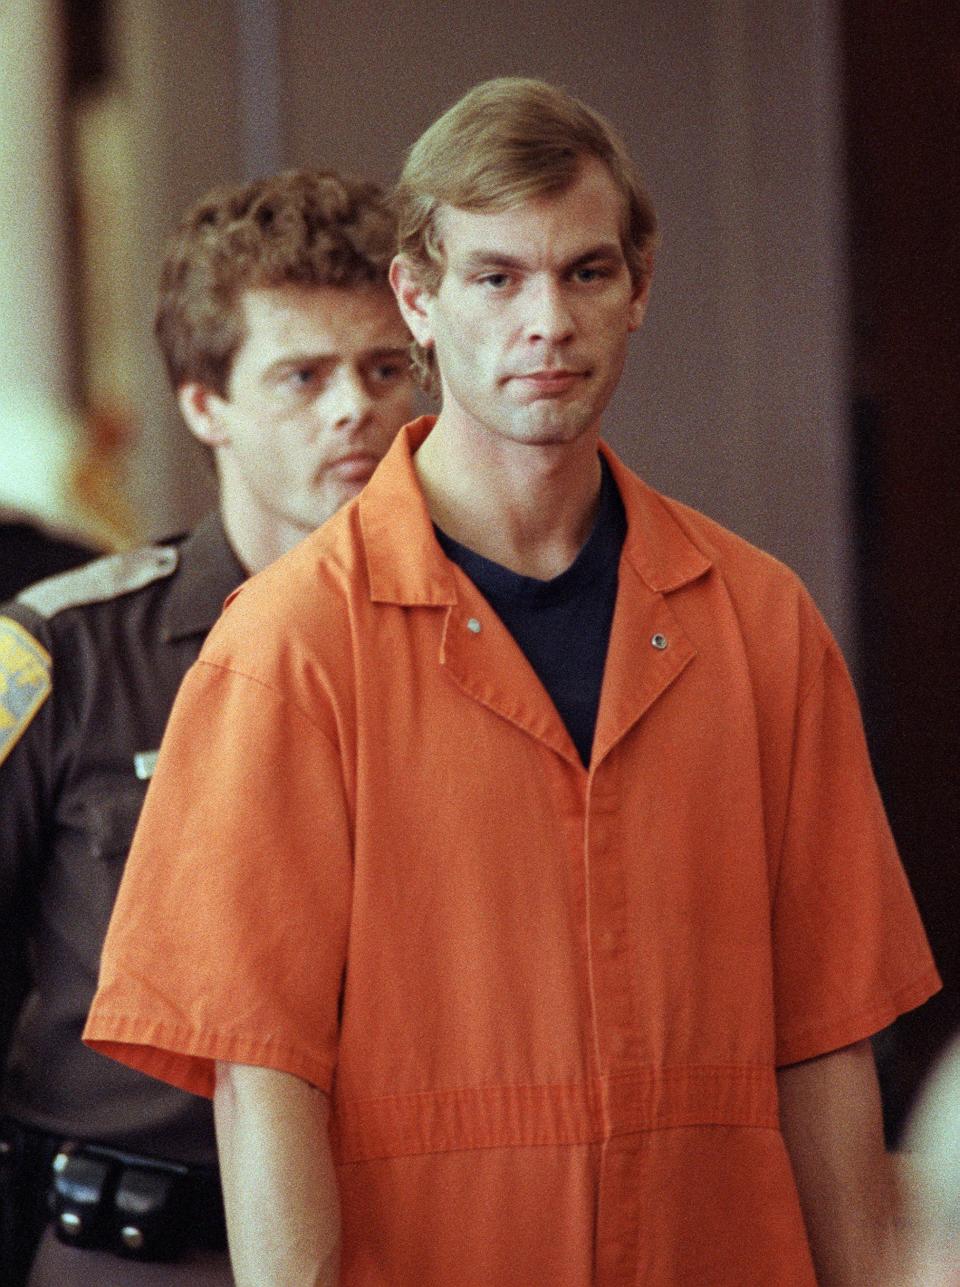 Jeffrey L. Dahmer enters a Milwaukee courtroom on Aug. 6, 1991.